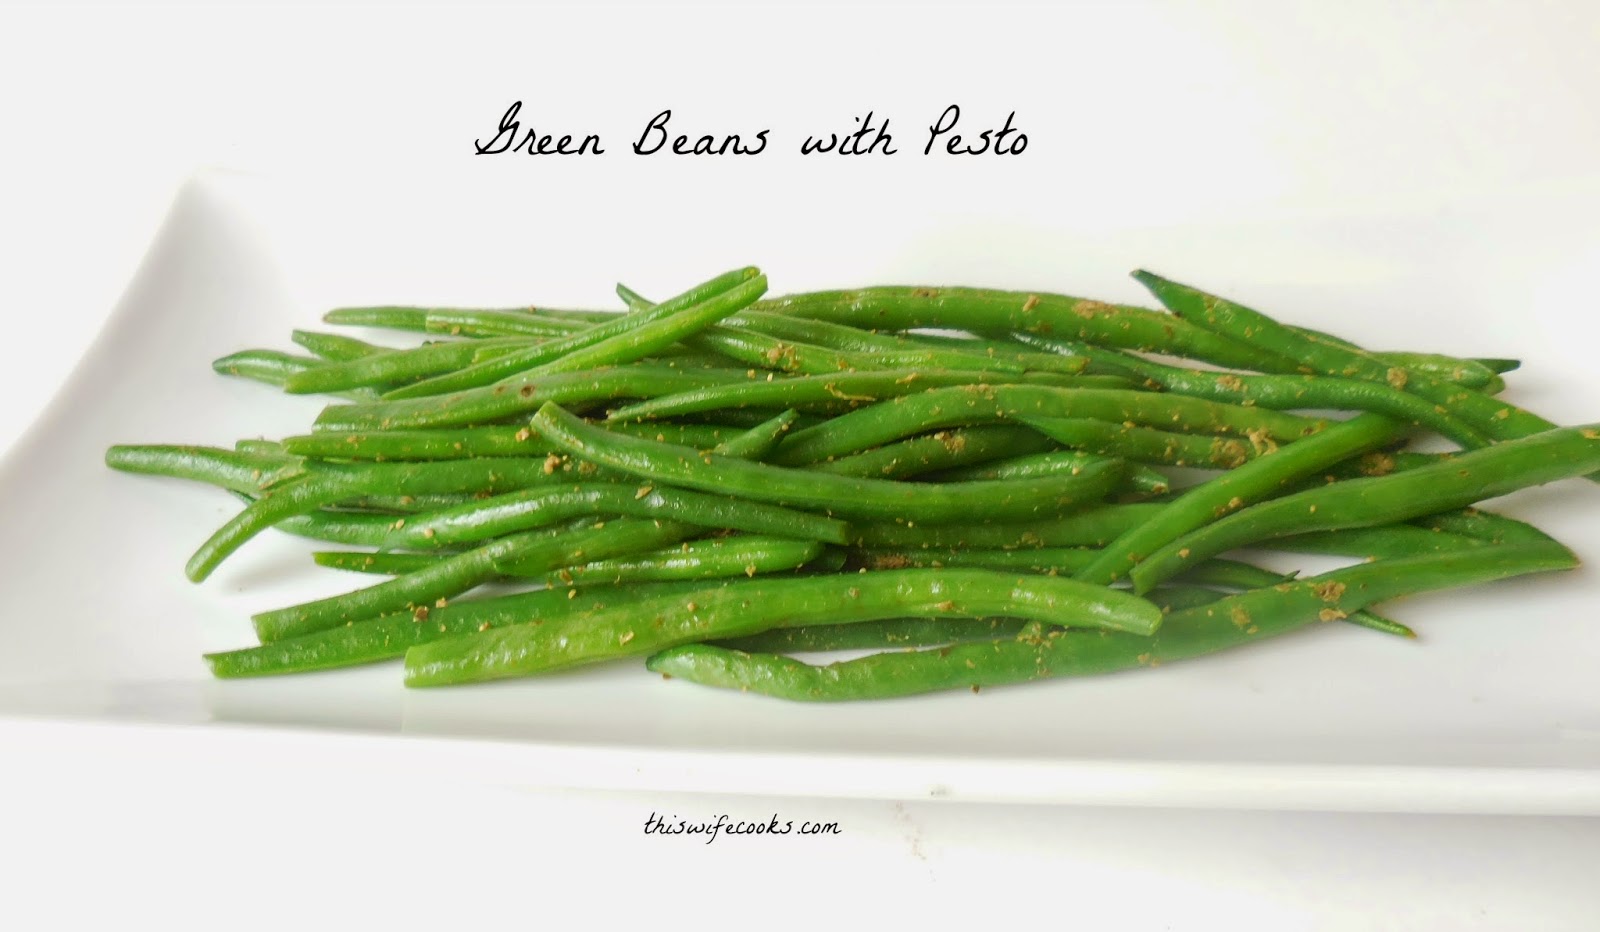 Green Beans with Pesto via @thiswifecooks